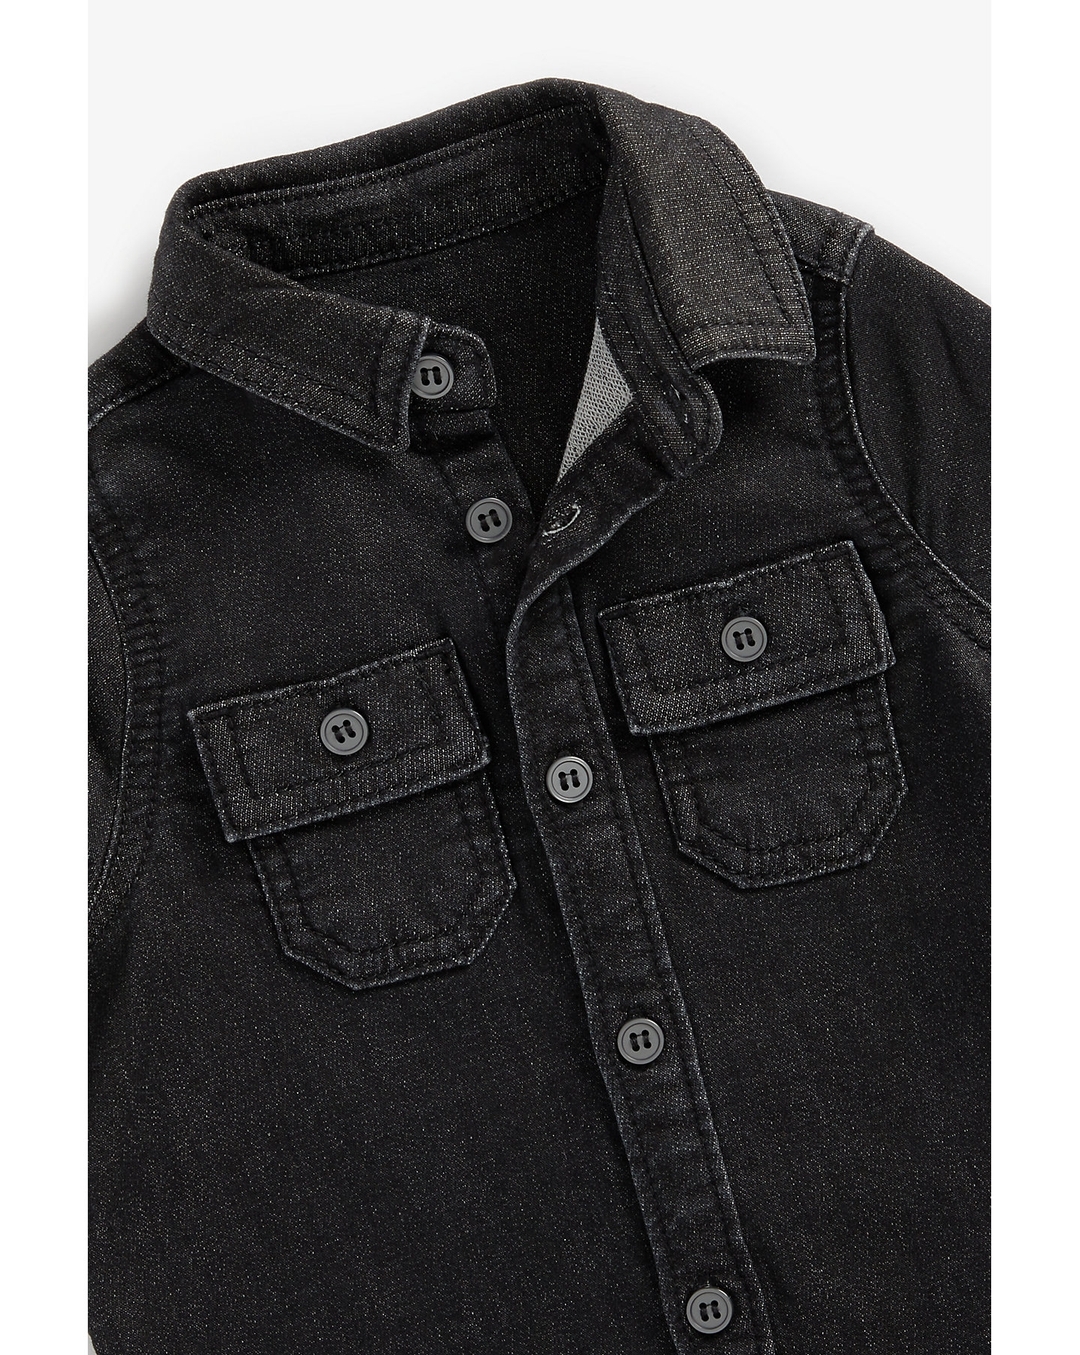 Distressed Black Denim Casual Shirt – Thestiffcollar.com